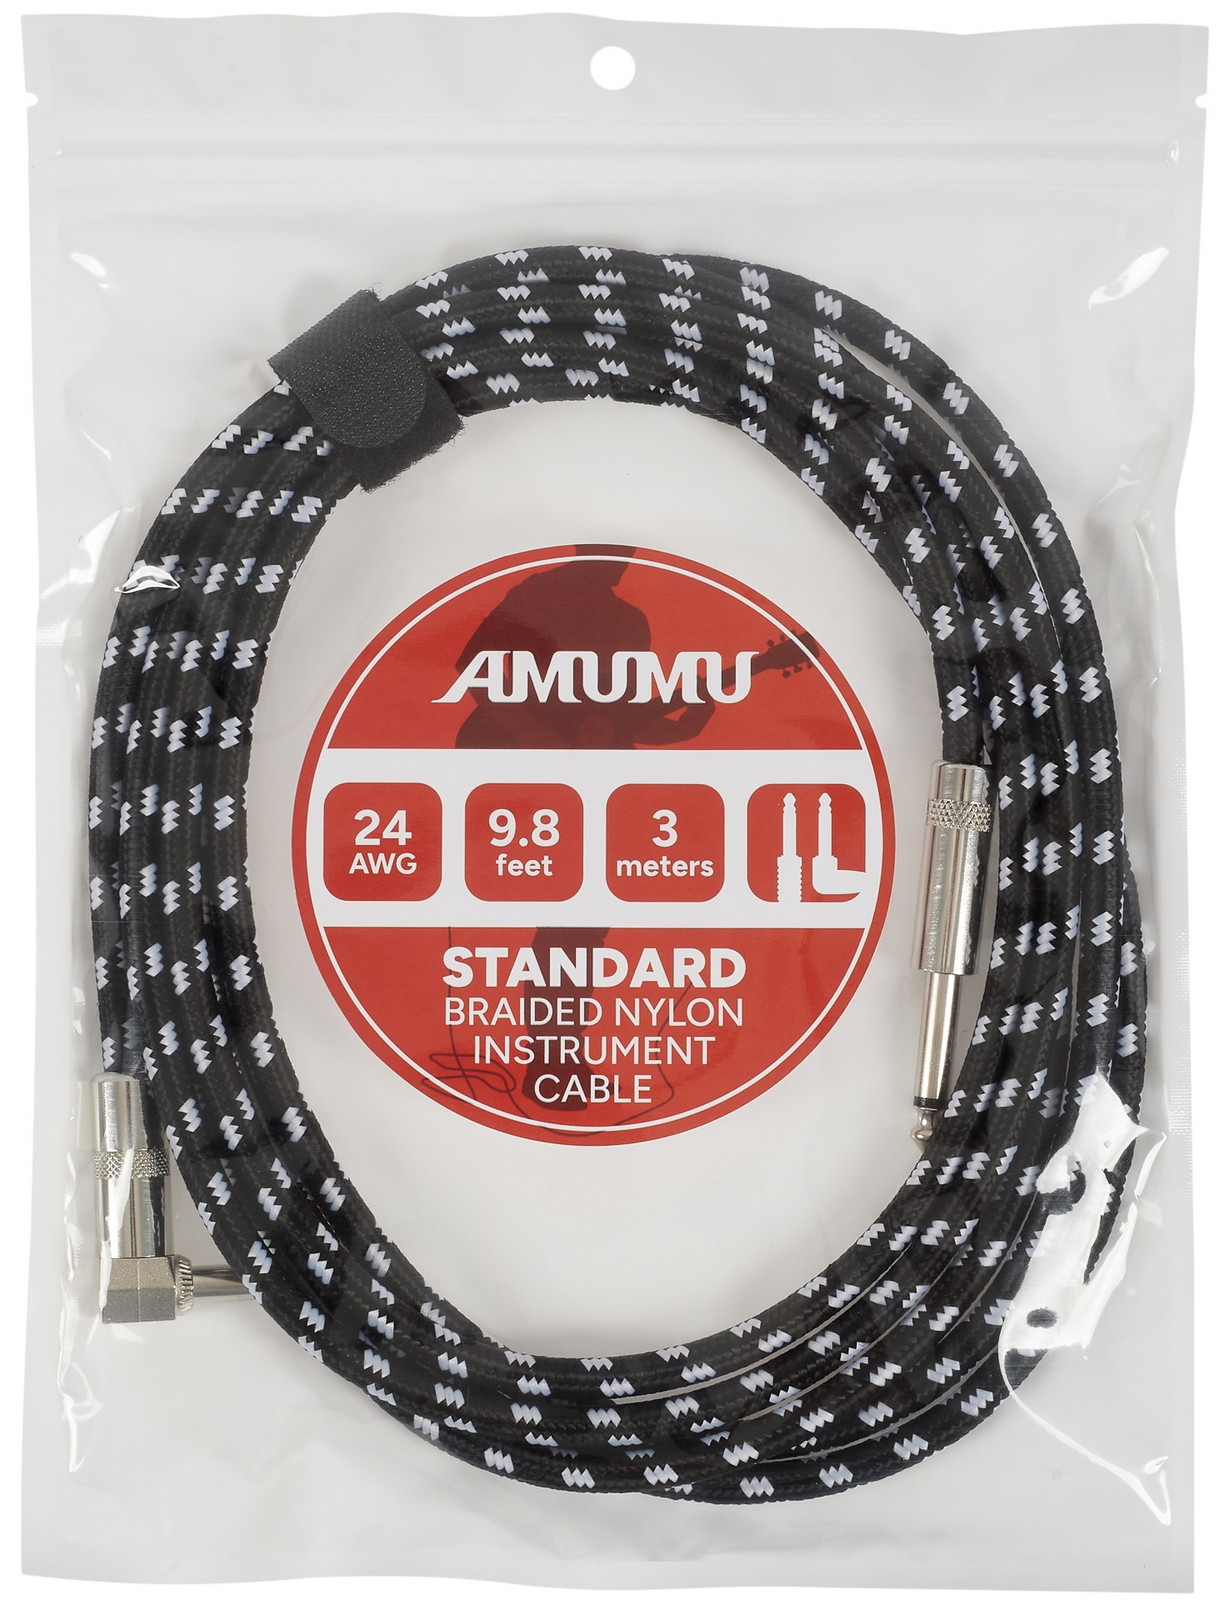 Amumu S30W-SA-3M Braided Nylon Instrument Cable